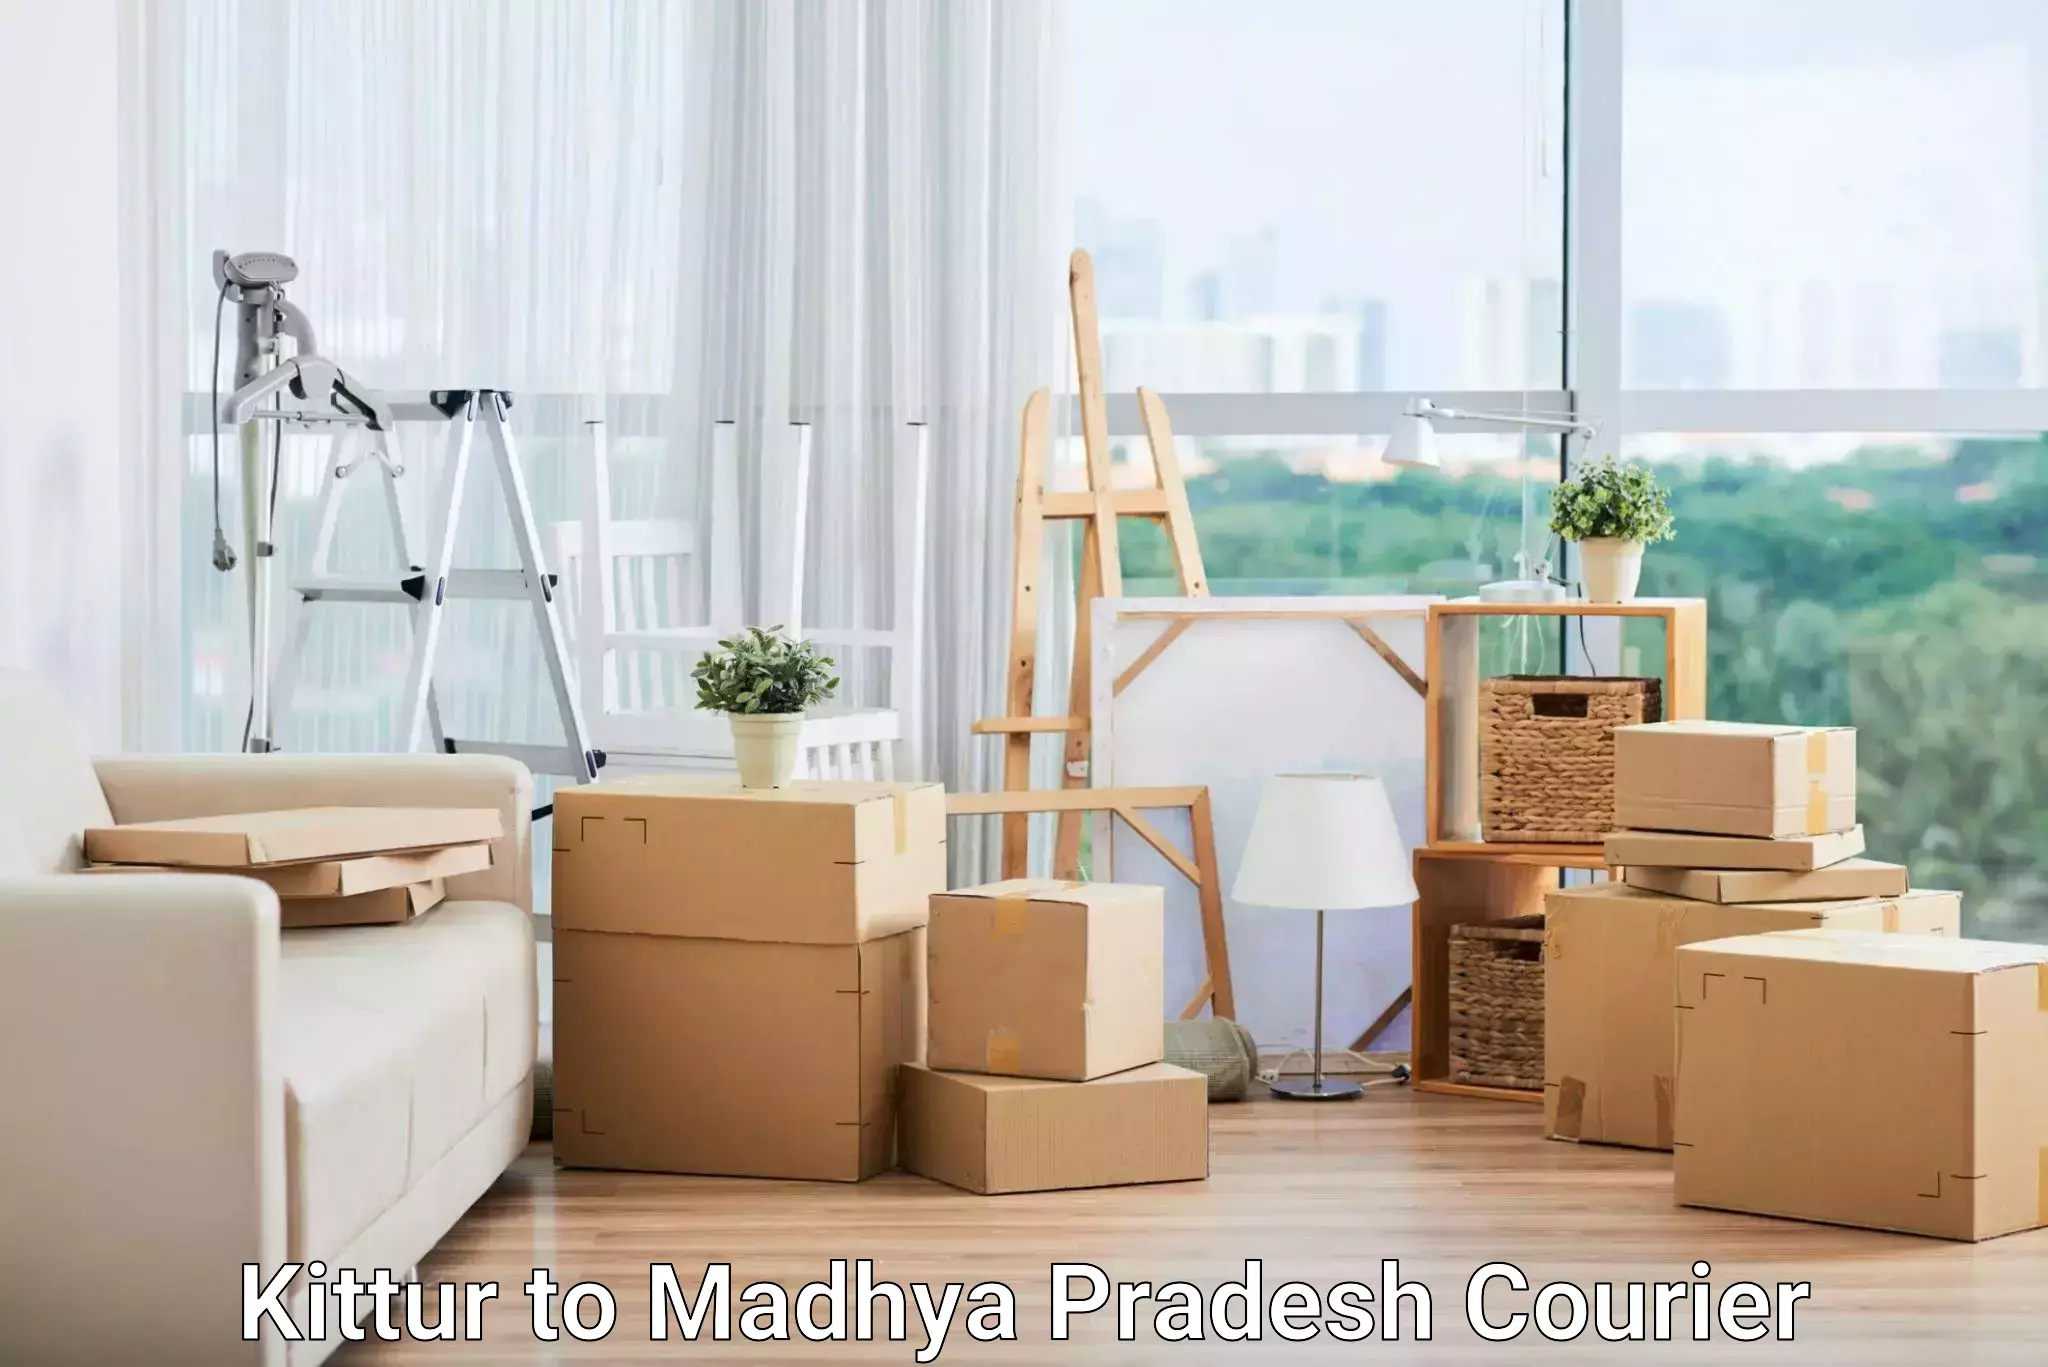 Logistics service provider Kittur to Madhya Pradesh